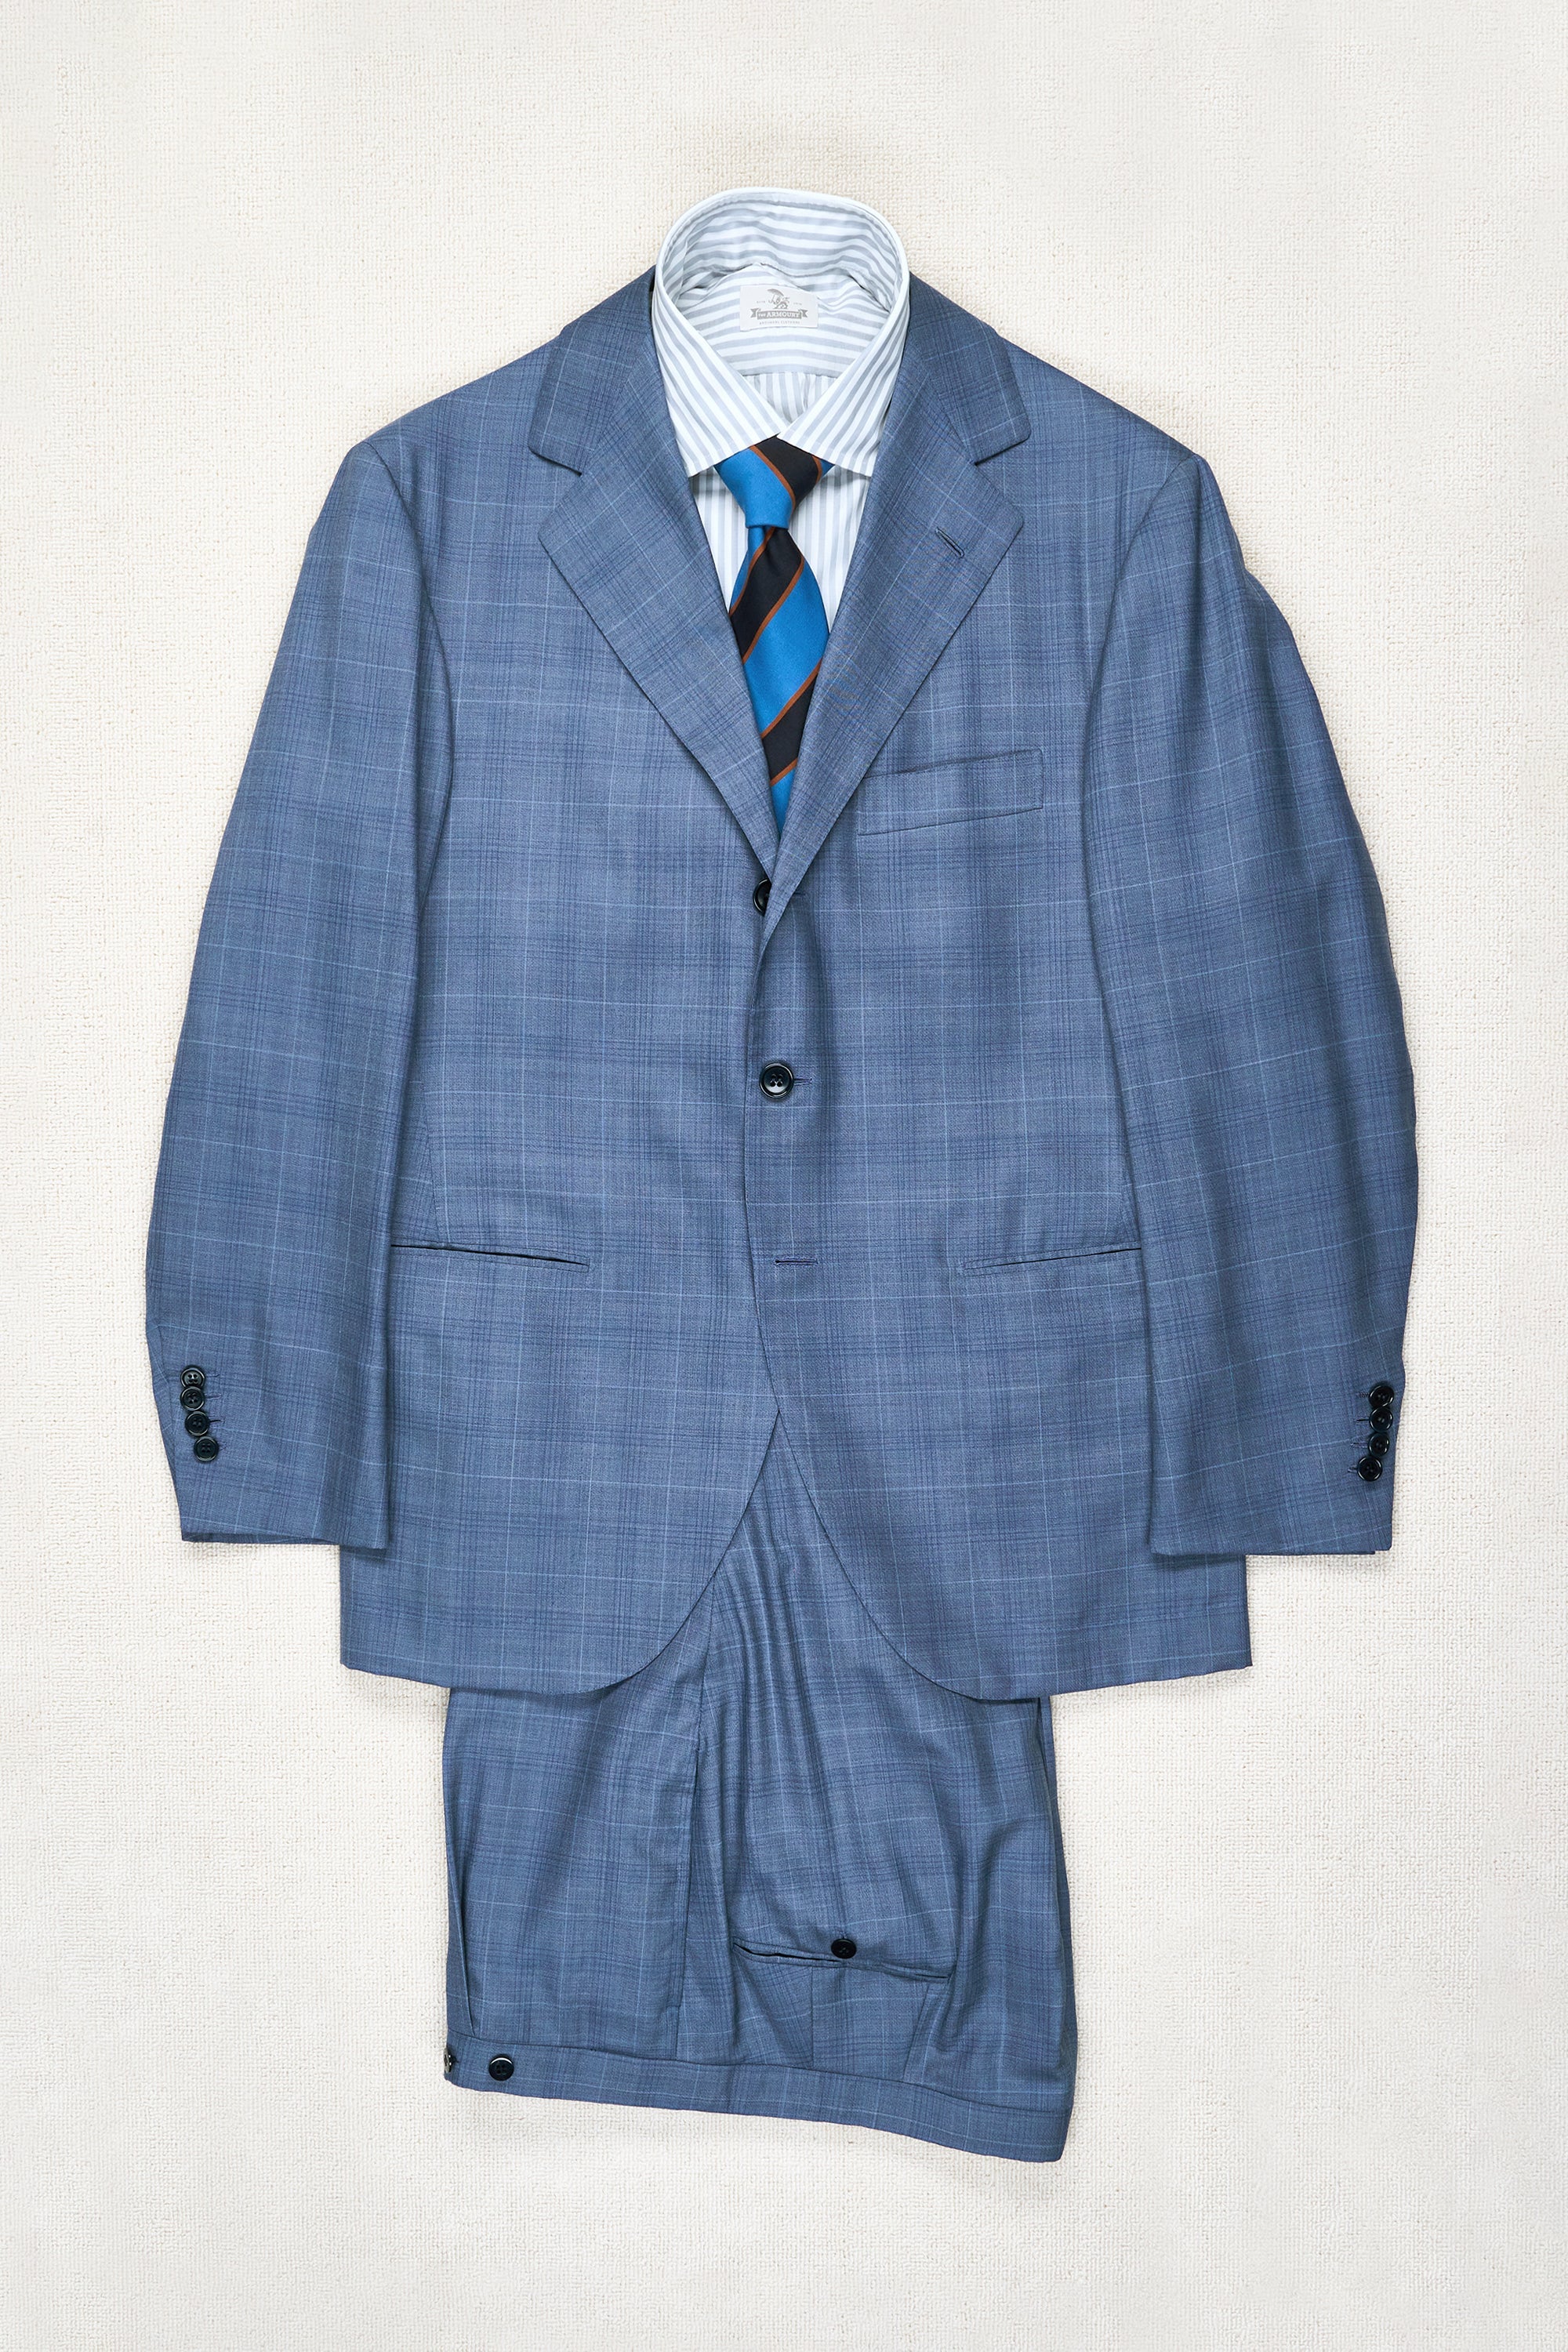 Liverano & Liverano Blue Check Wool/Silk Suit Bespoke